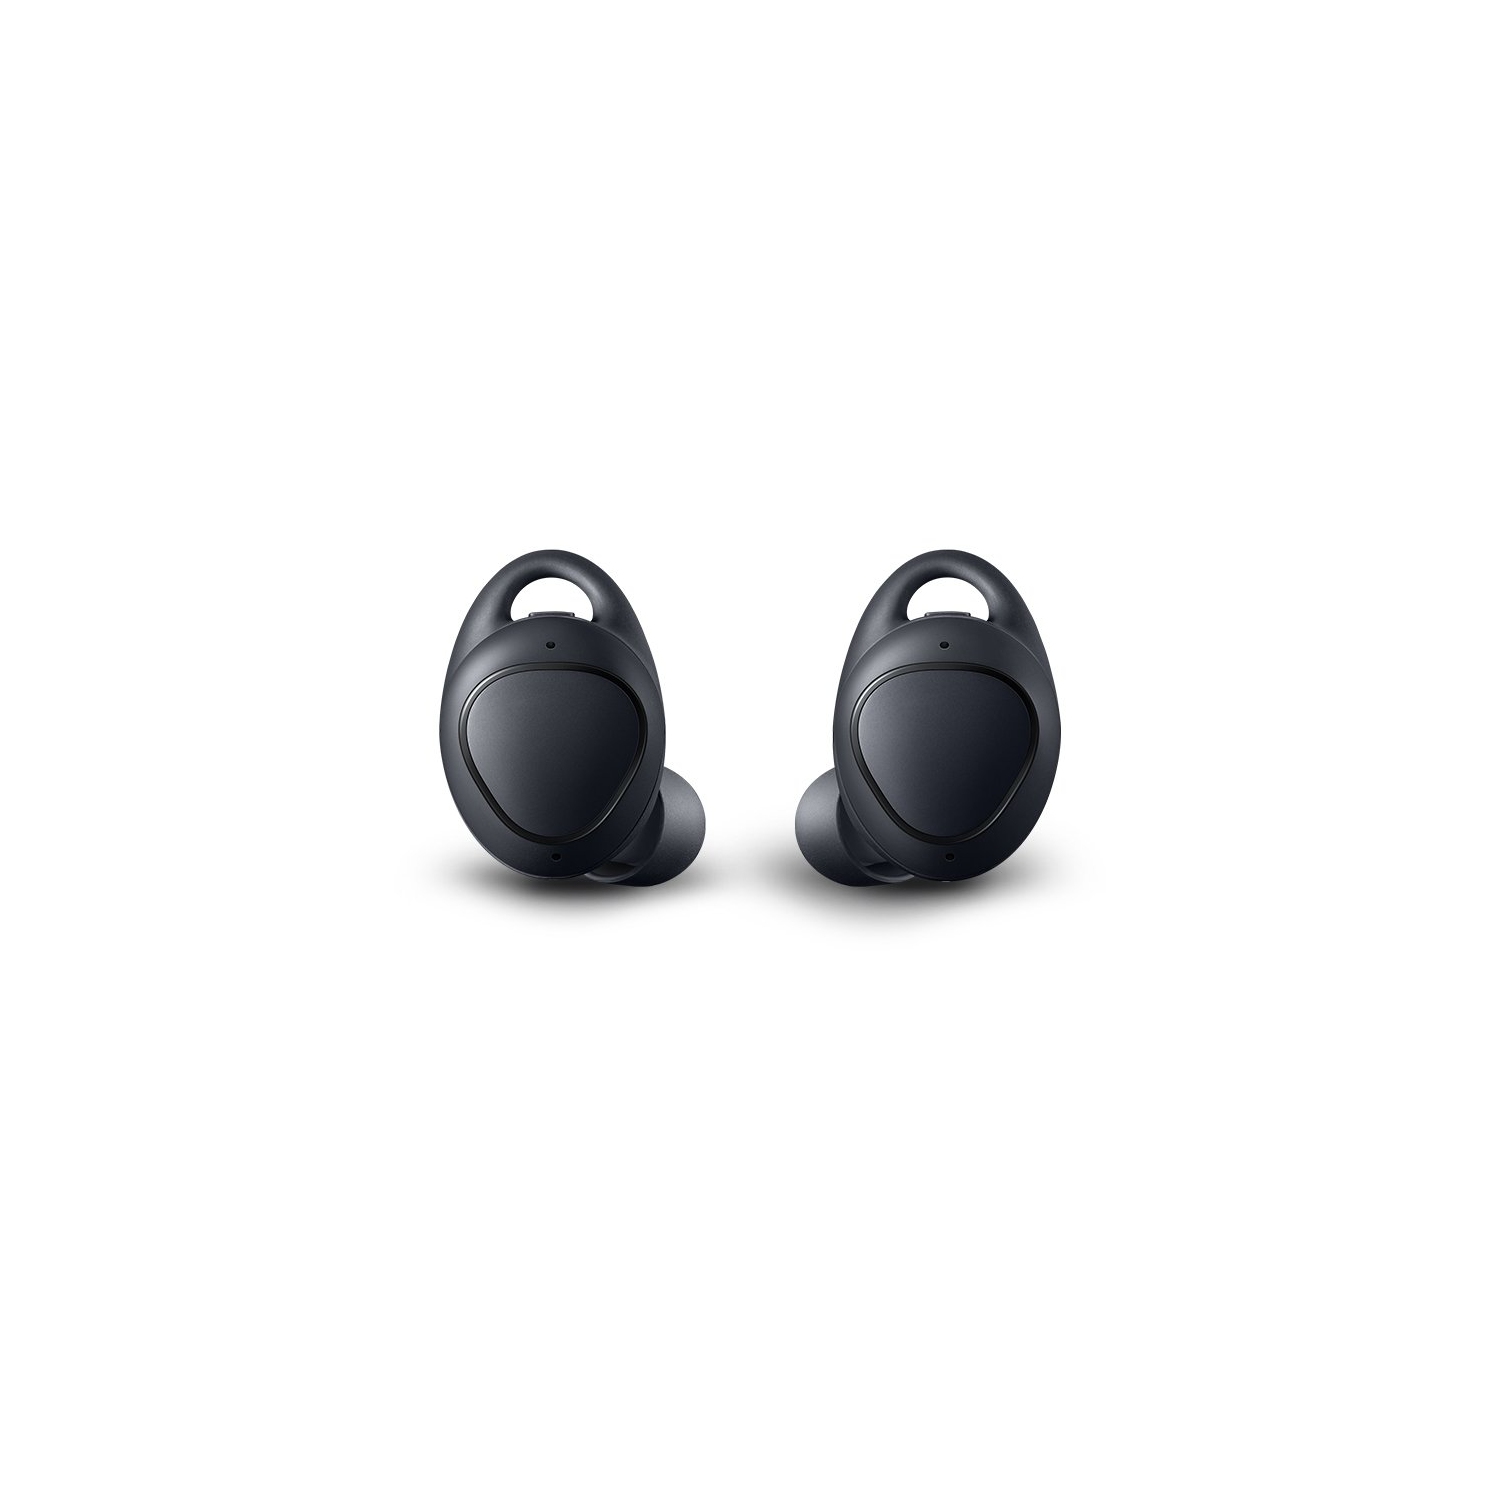 Samsung Gear IconX SM-R140NZKAXAR Bluetooth Cord-free Fitness Earbuds - Black - Open Box